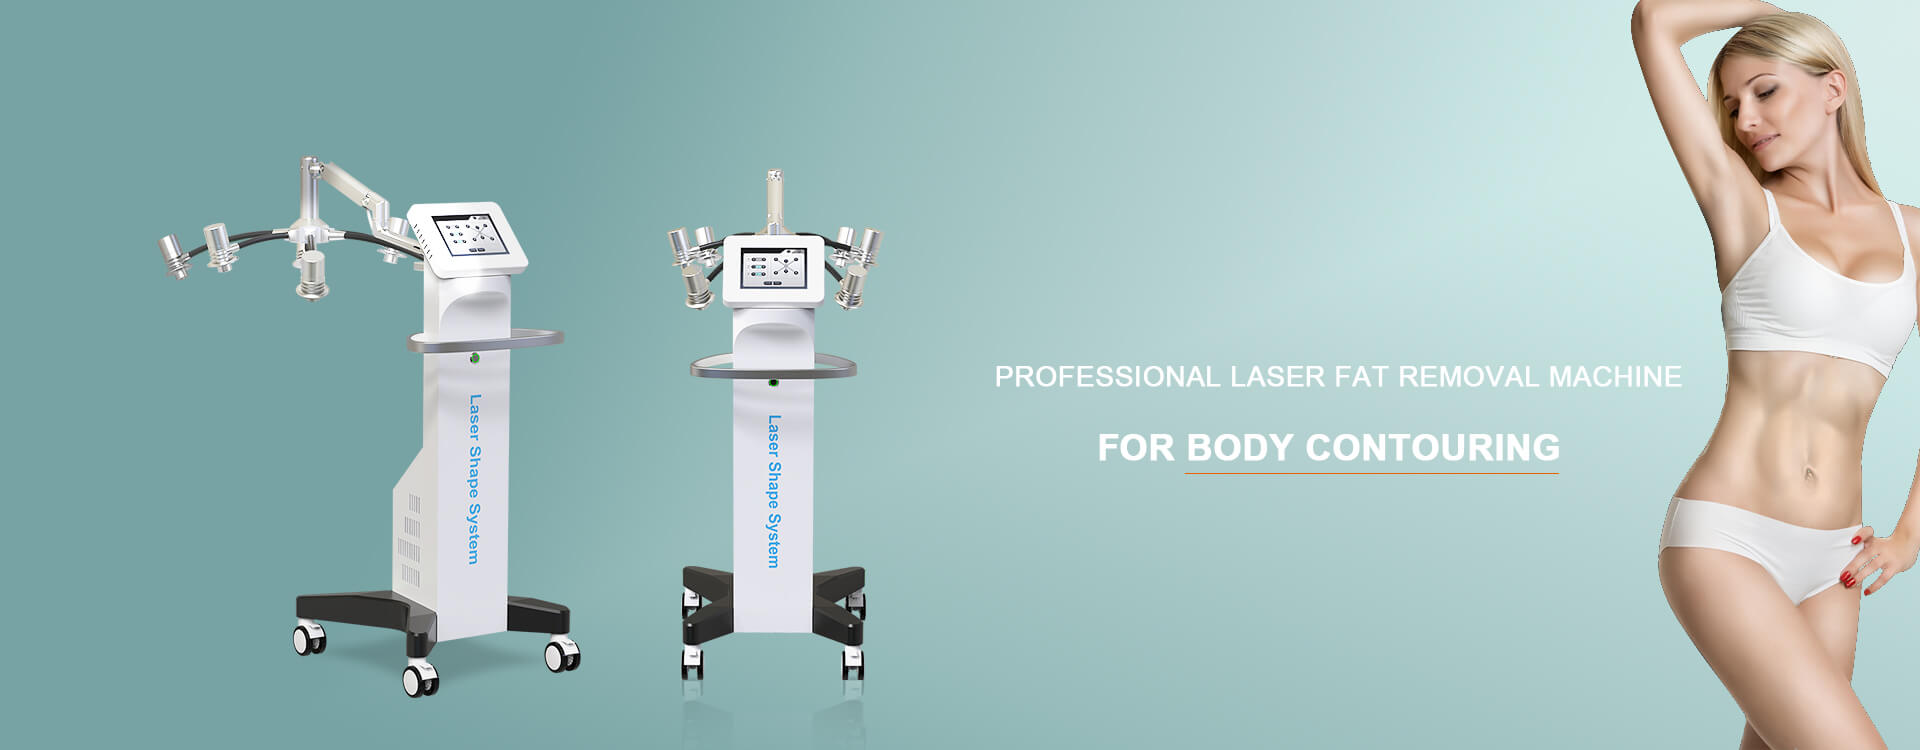 BODY CONTOURING - Med Laser USA